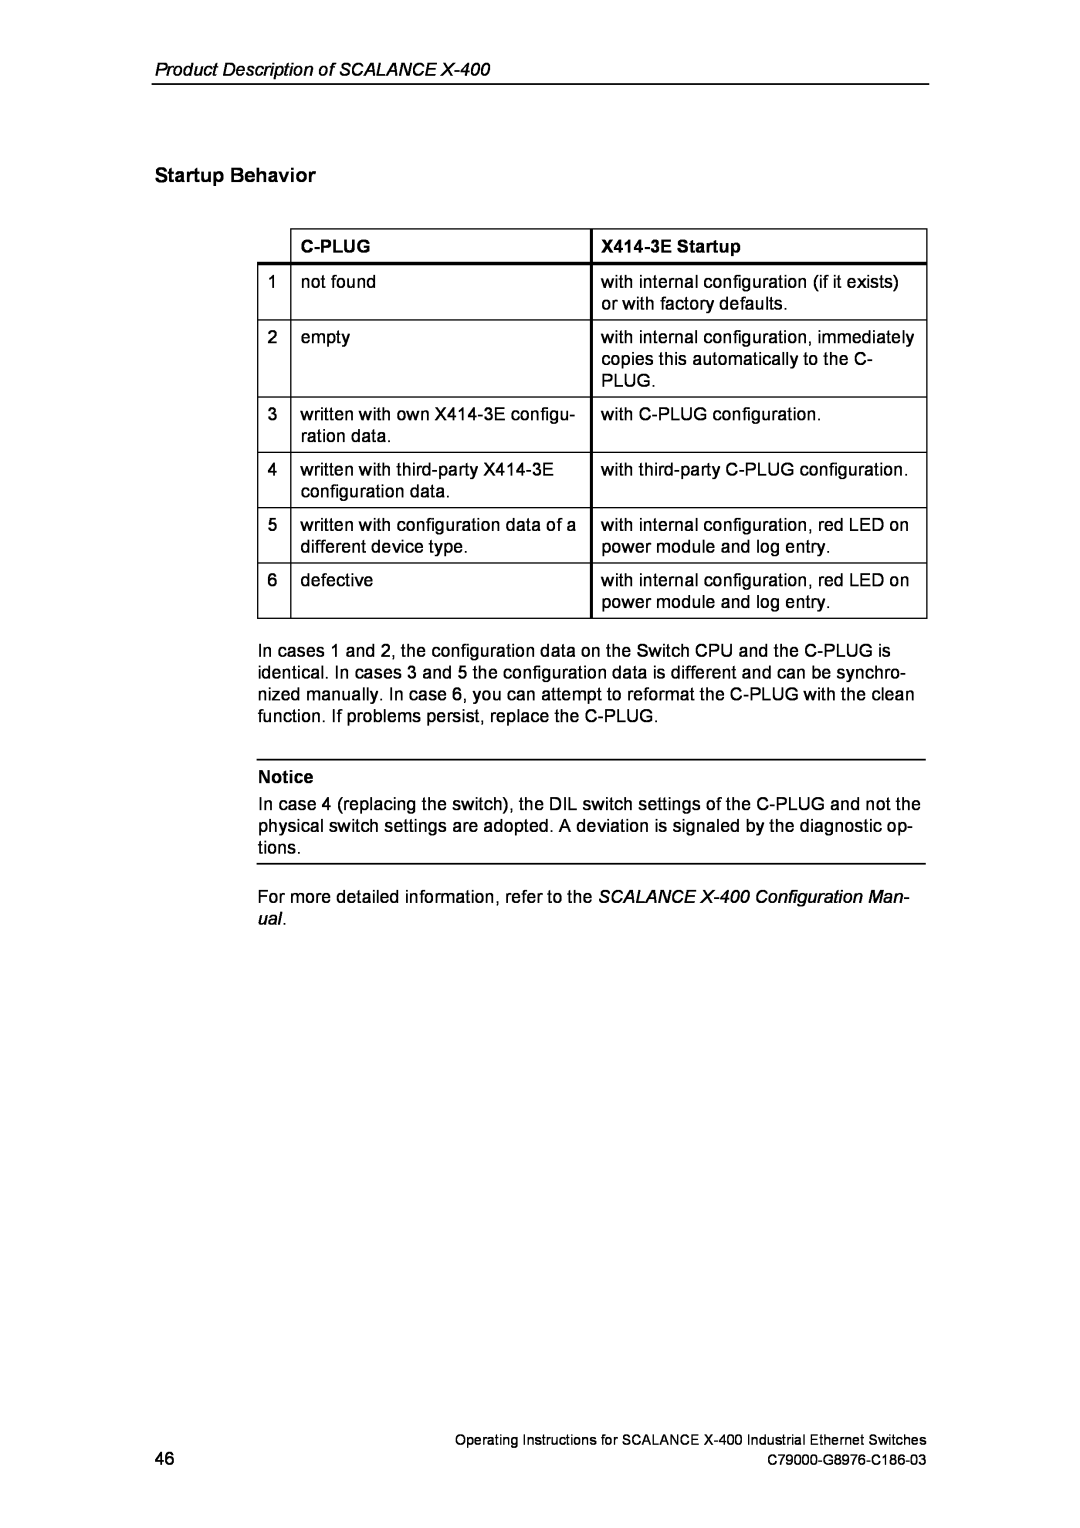 Siemens X-400 technical specifications Startup Behavior, Product Description of SCALANCE, C-Plug, X414-3E Startup 